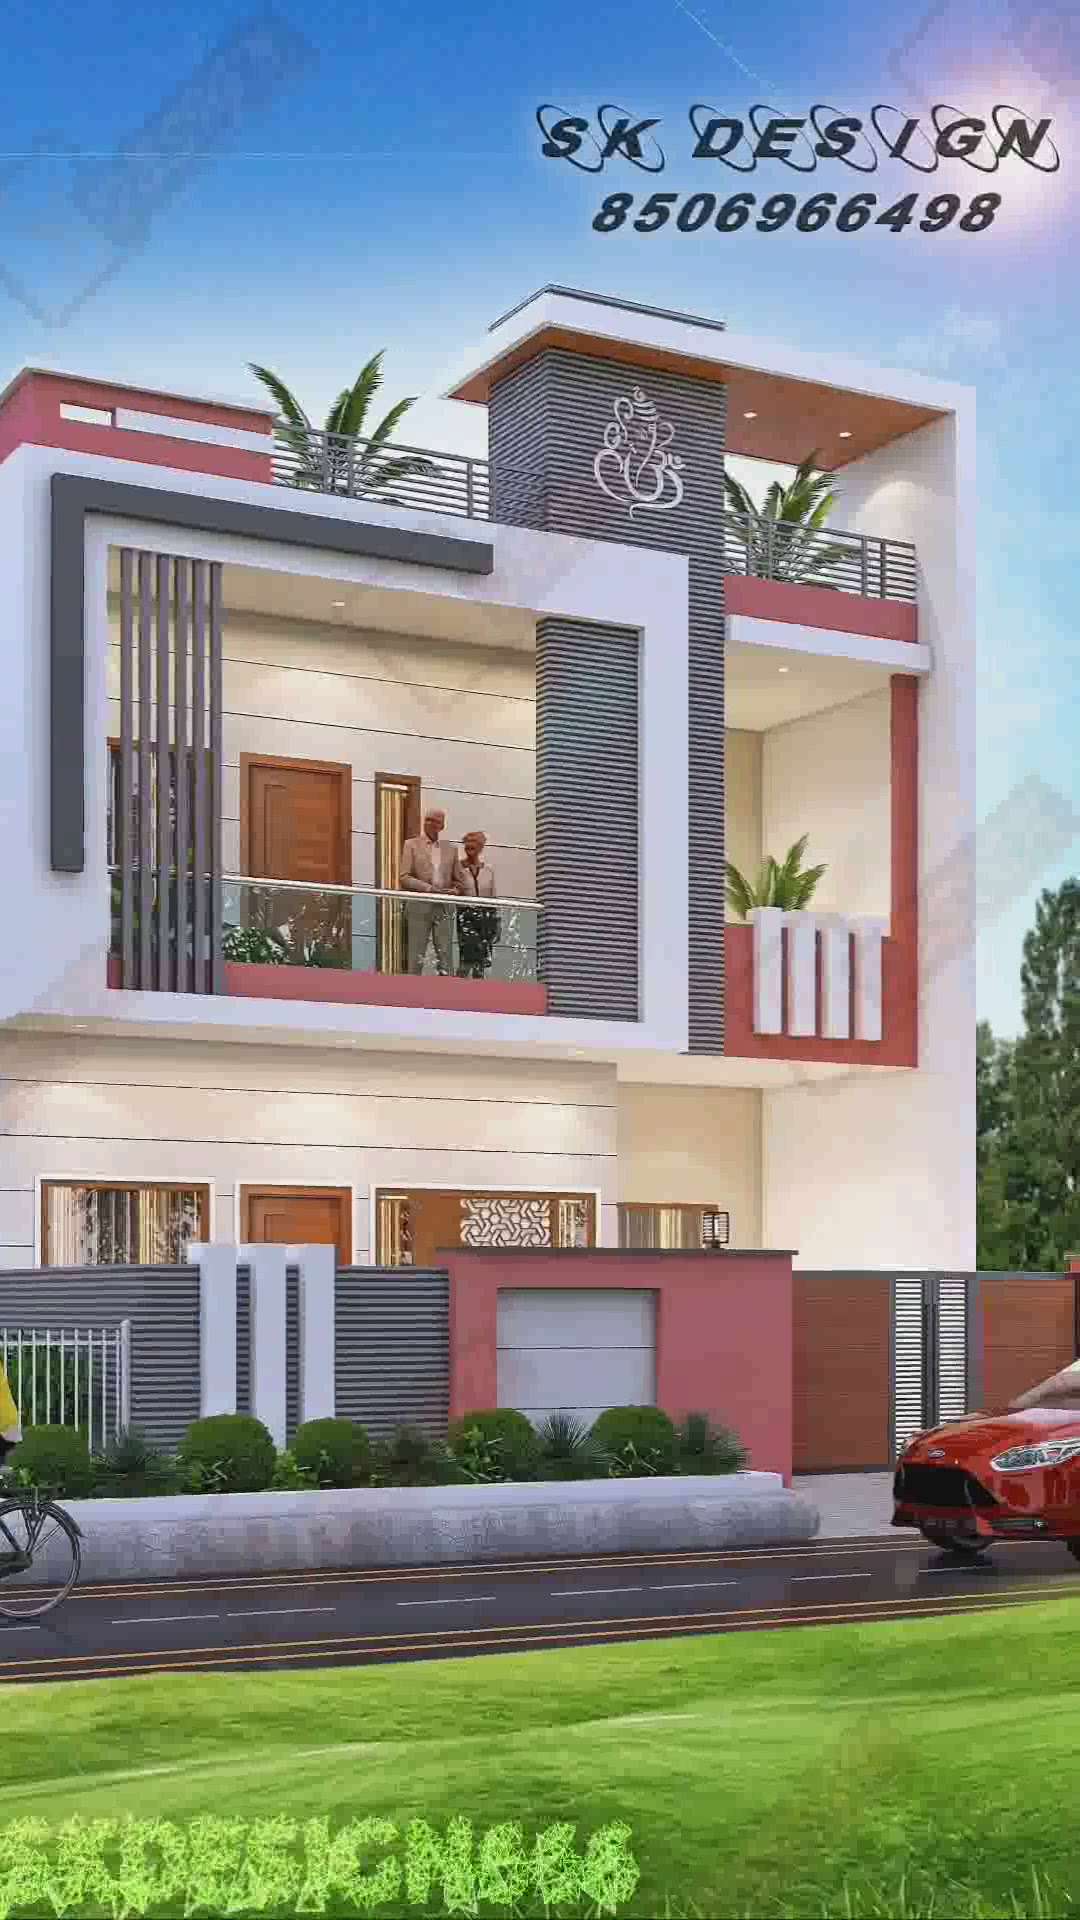 modern house of 2023. #Architect #exteriordesigns #HouseDesigns #homedesign #frontElevation #facade #modern2023 #modenhome #skdesign666 #trendingdesign #HouseConstruction #koloviral #kolopost